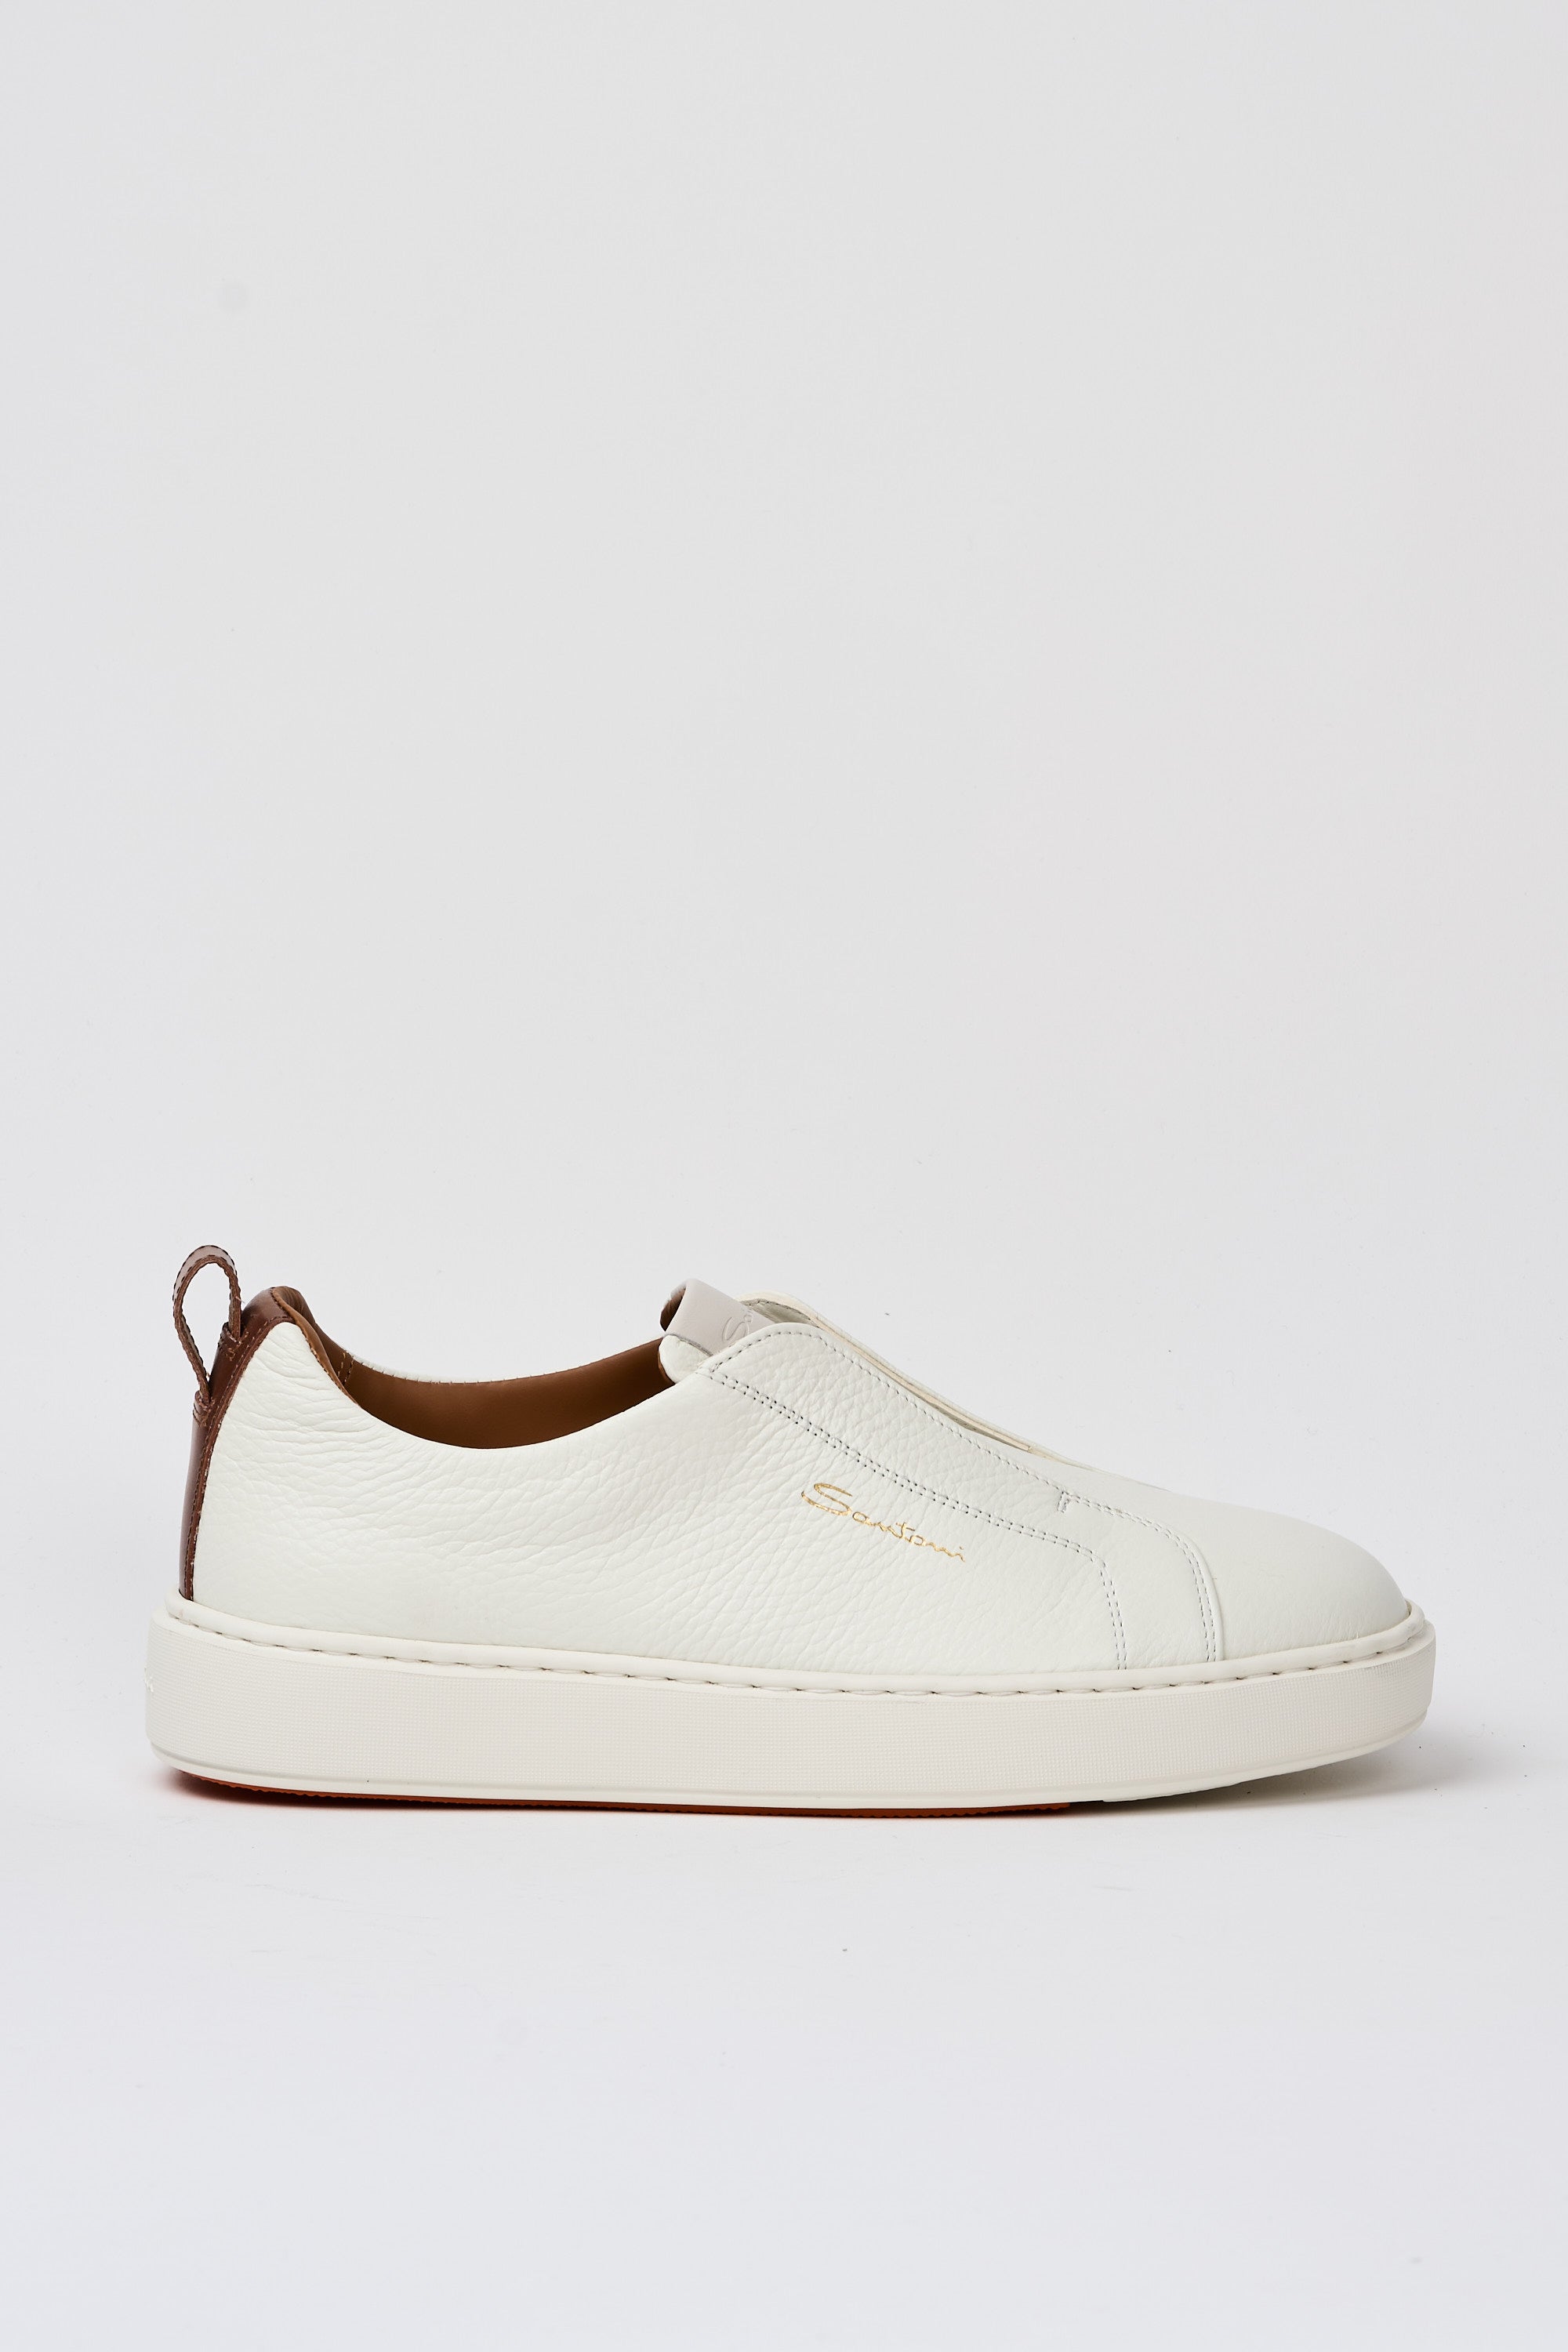 Santoni Slip On Leather Sneakers White-1